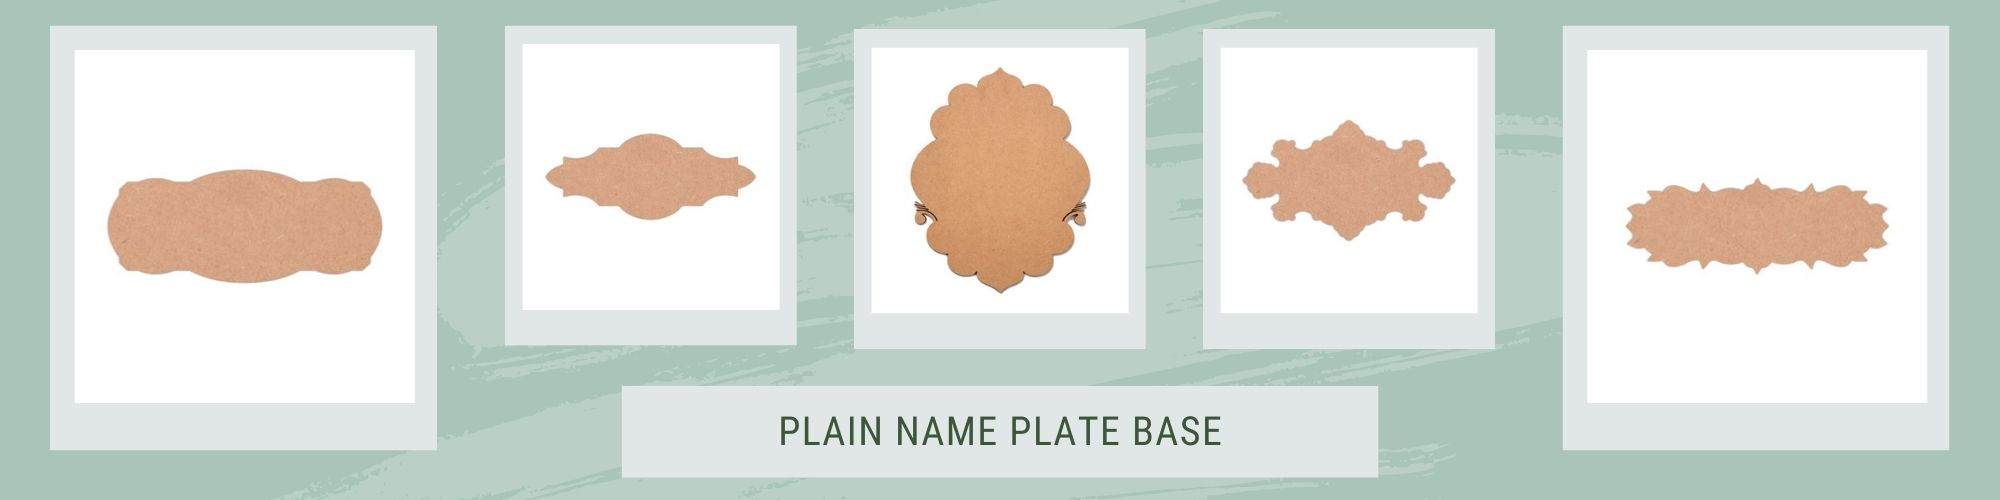 plain name plate base